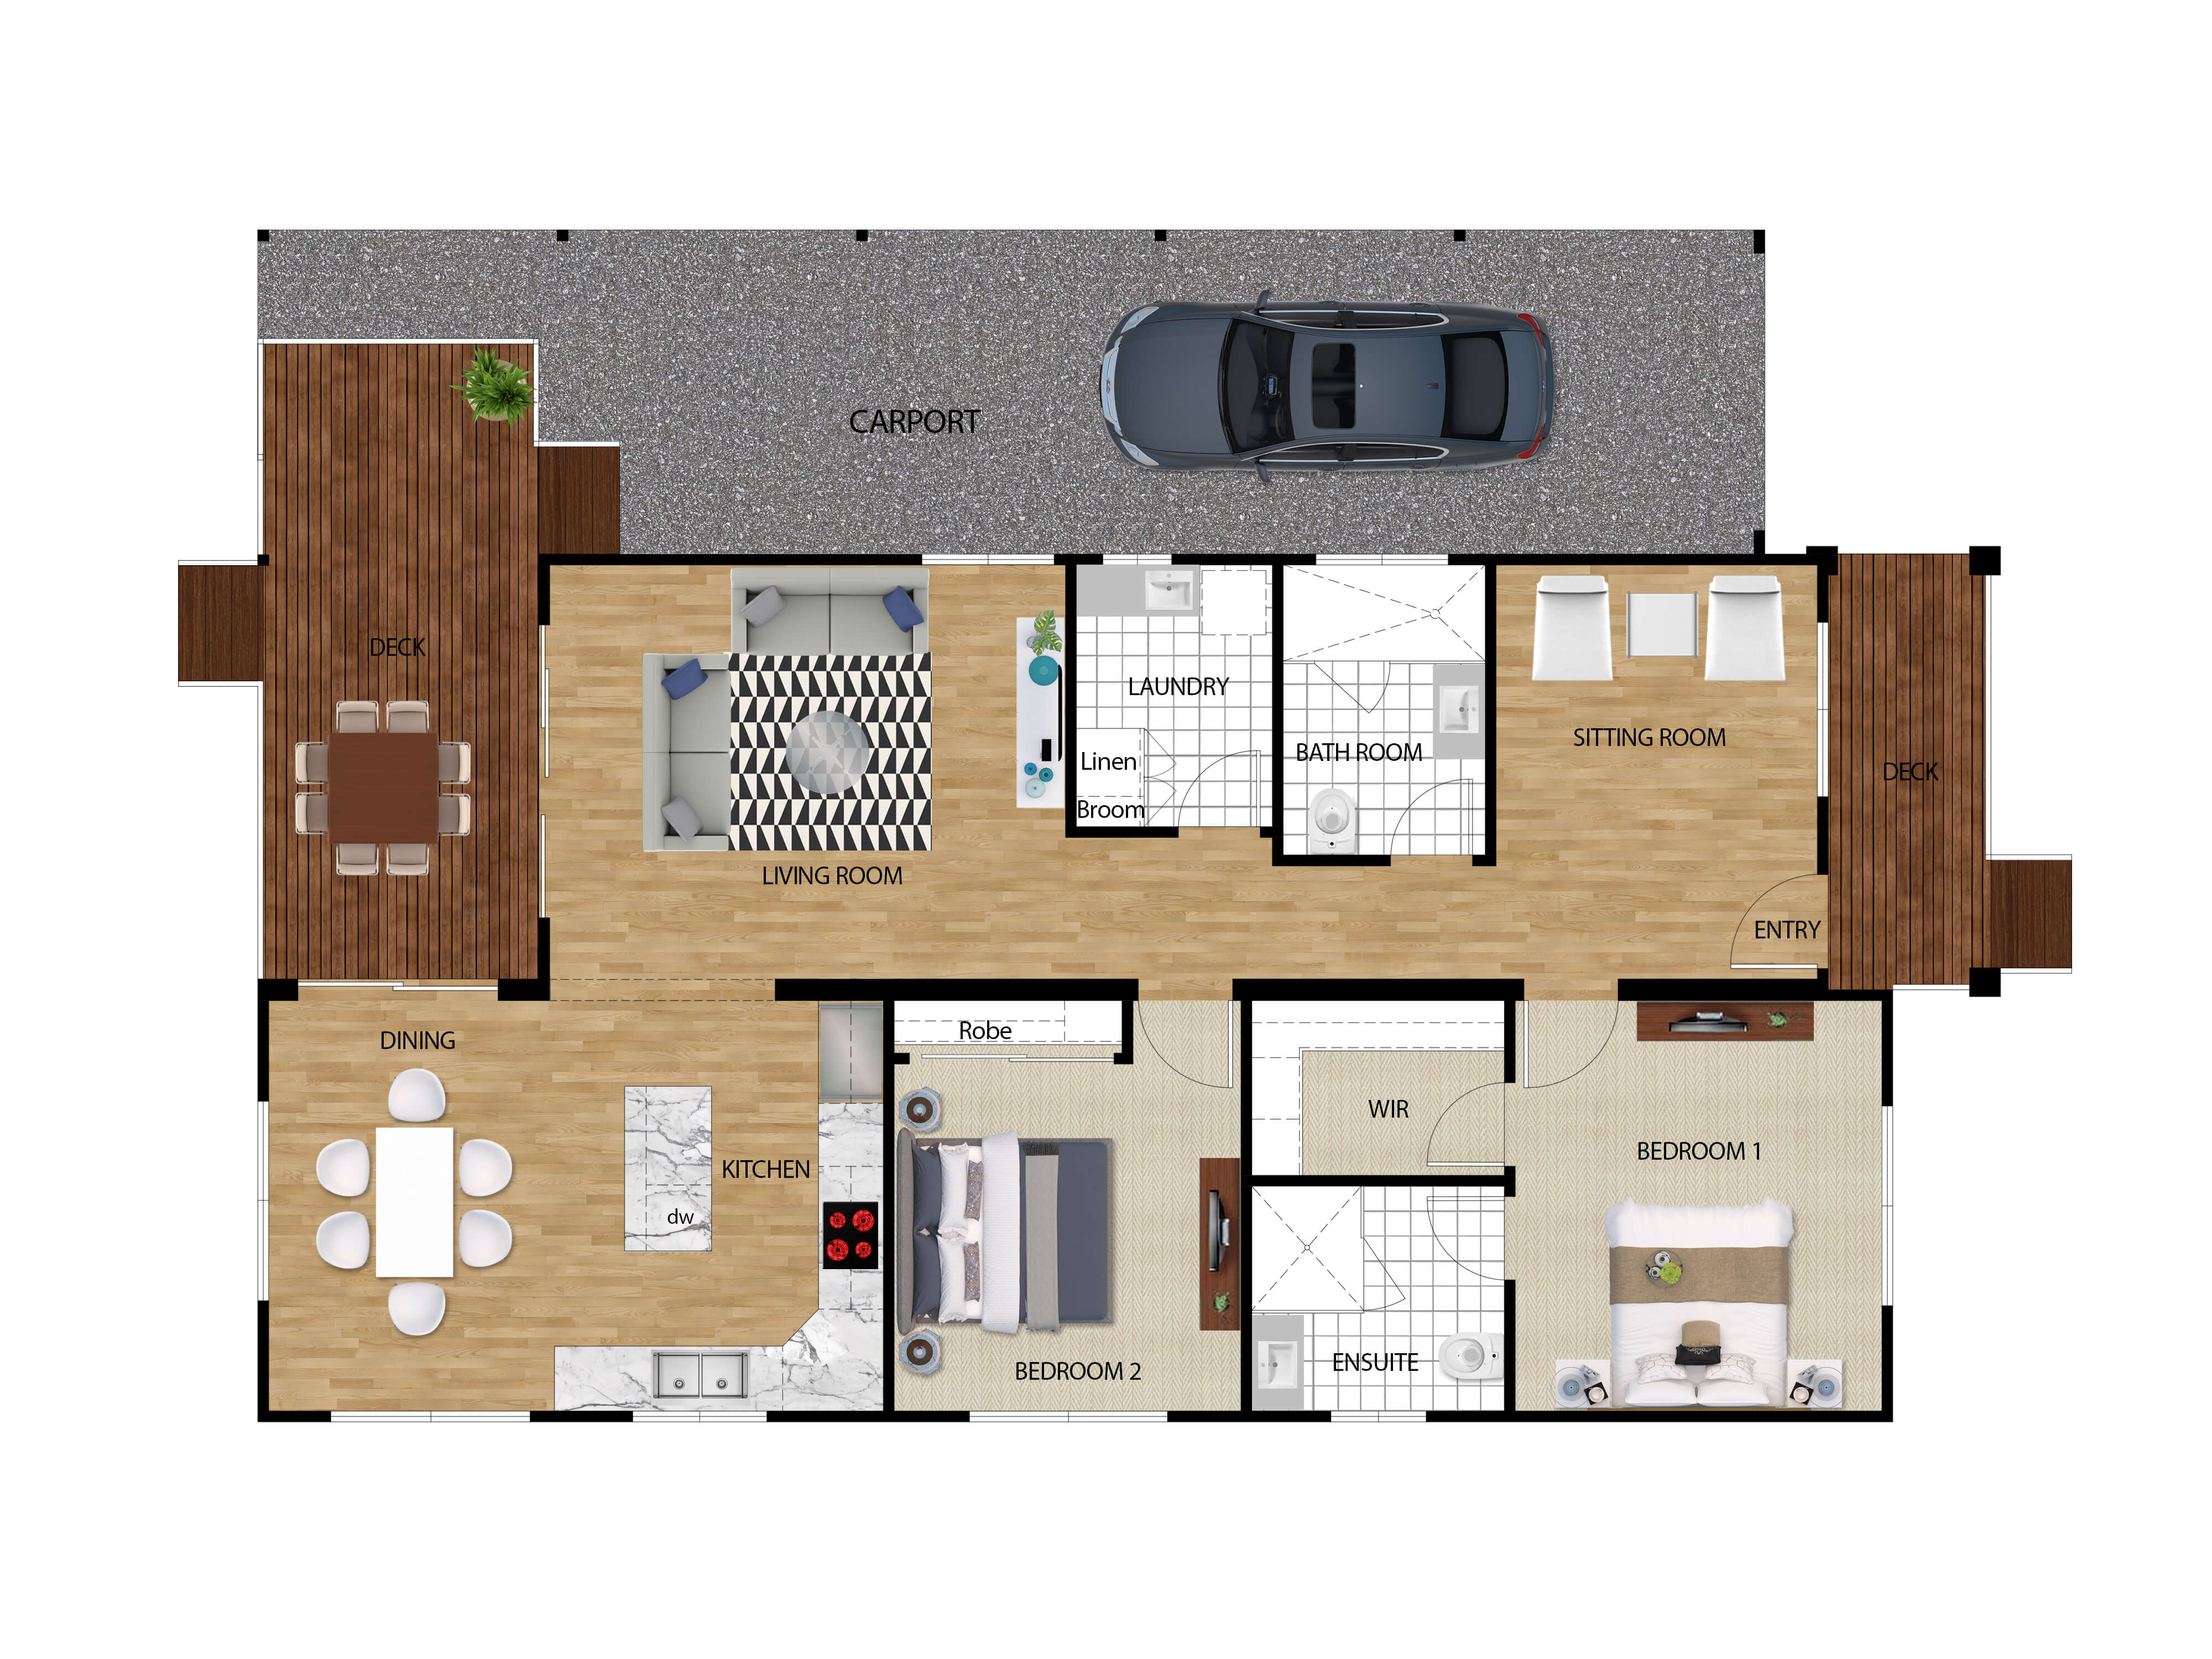 2D Floor Plan Design / Rendering Samples / Examples